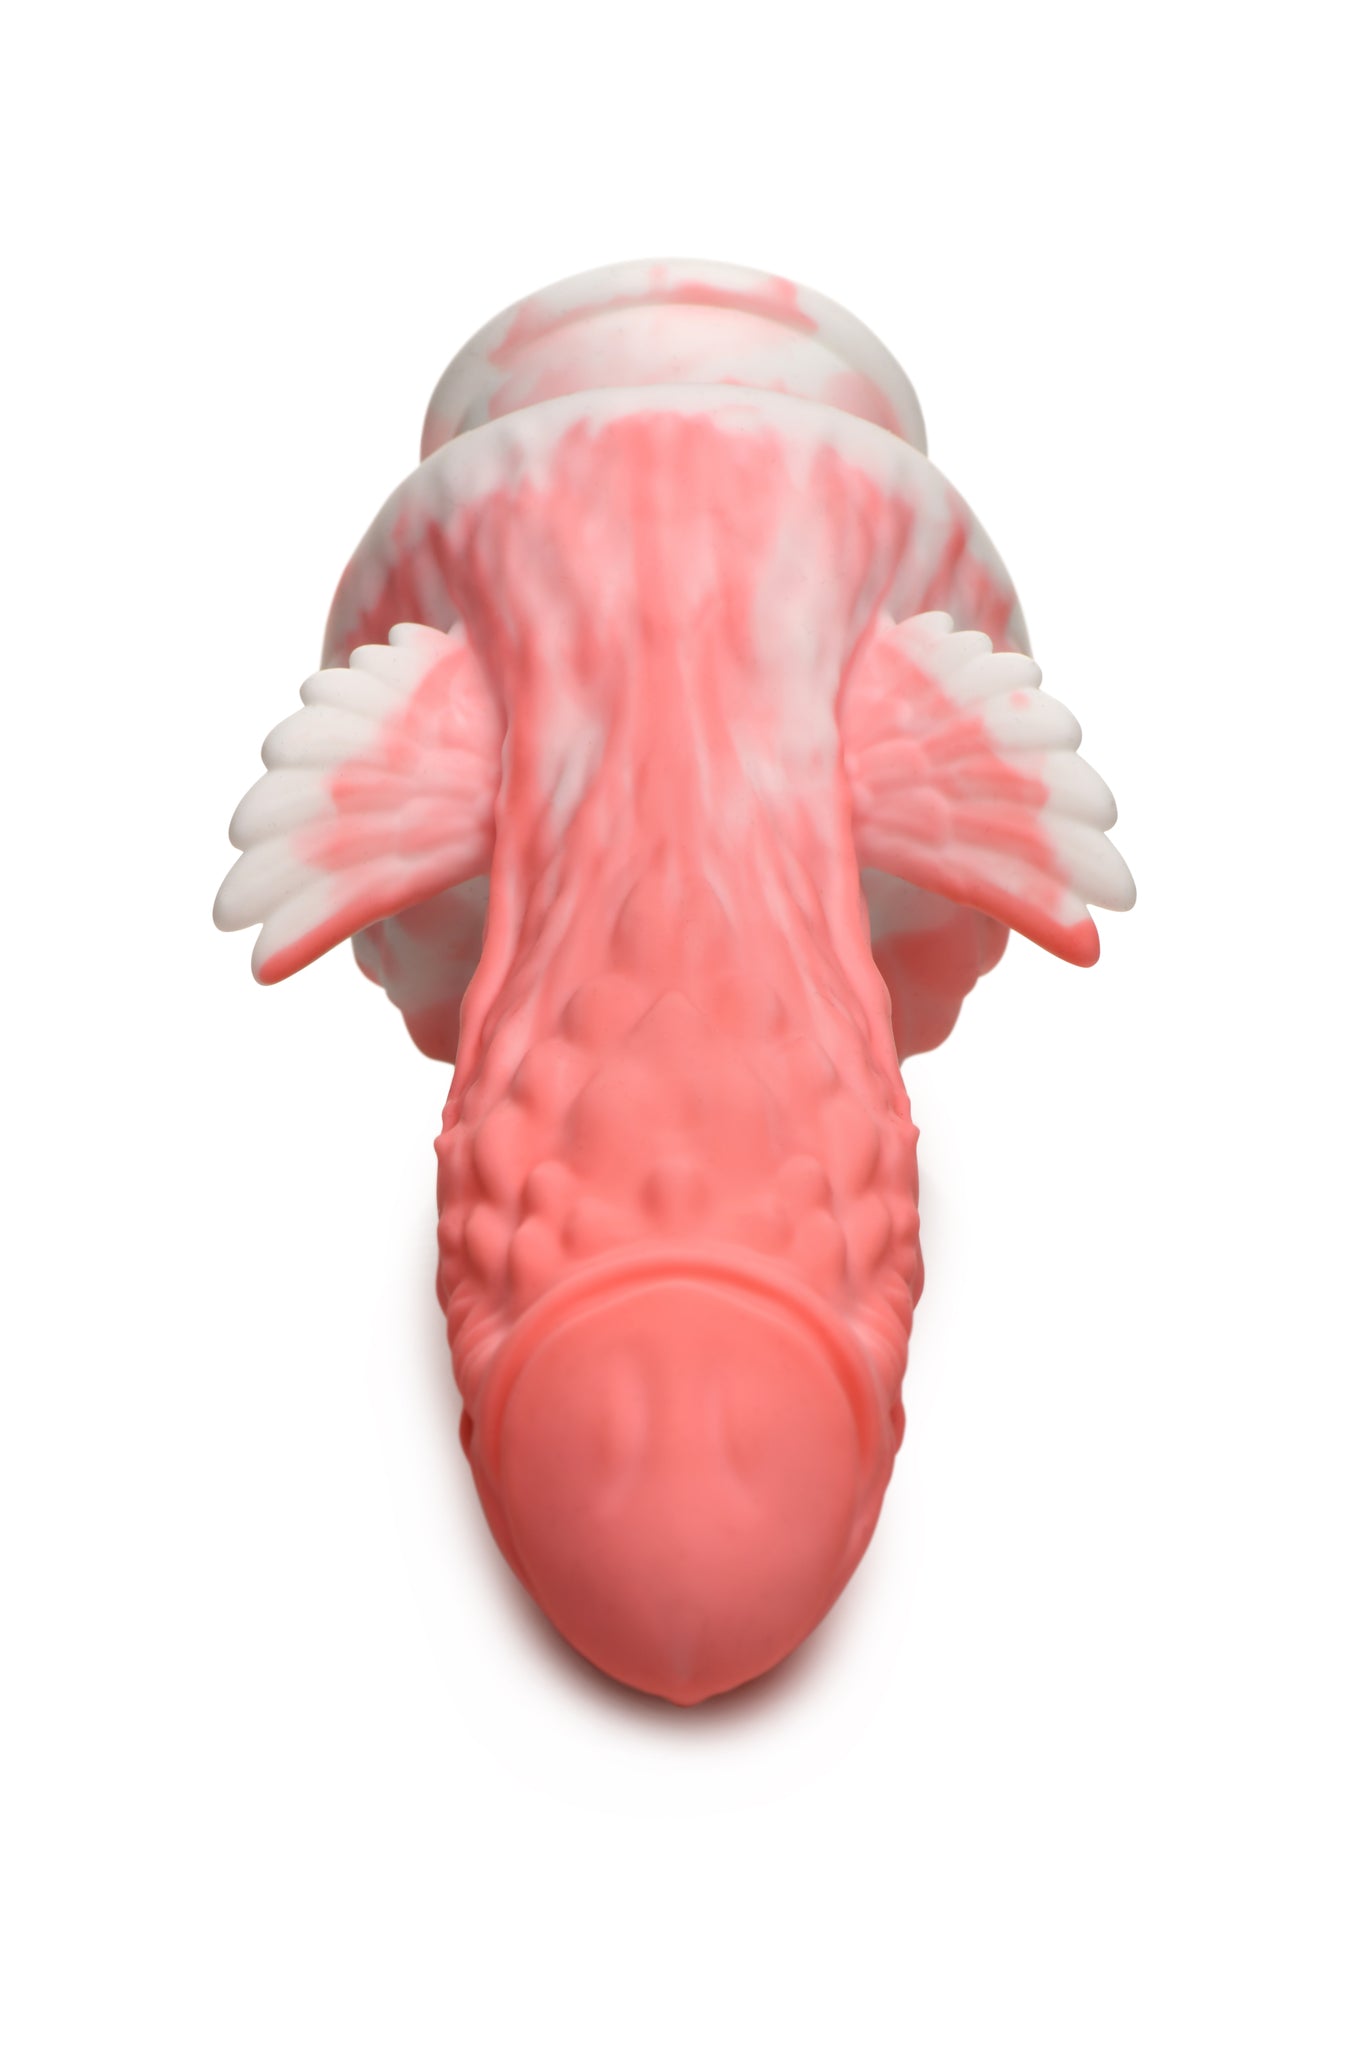 Pegasus Pecker Winged Flexible Fantasy Dildo by Creature Cocks